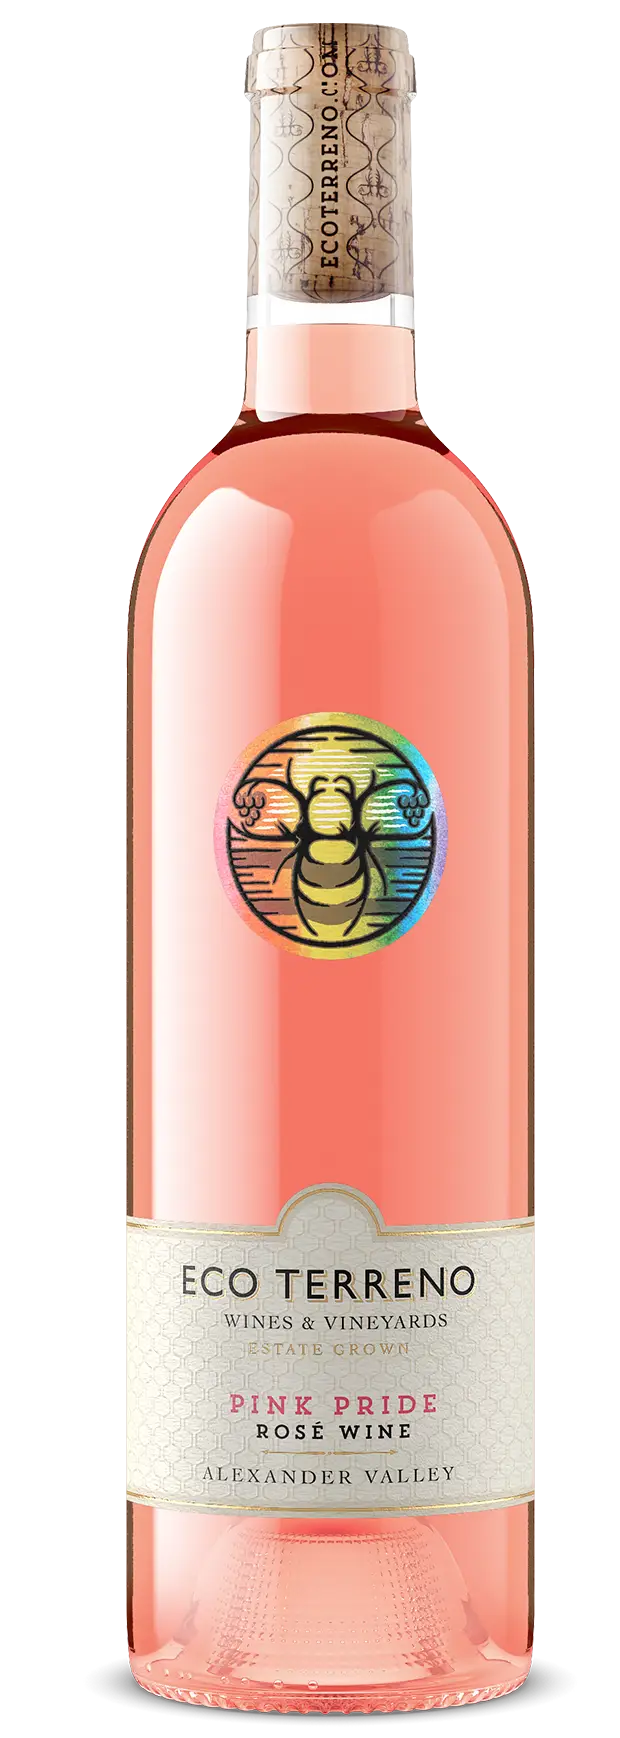 Bottle of Eco Terreno Pink Pride rose